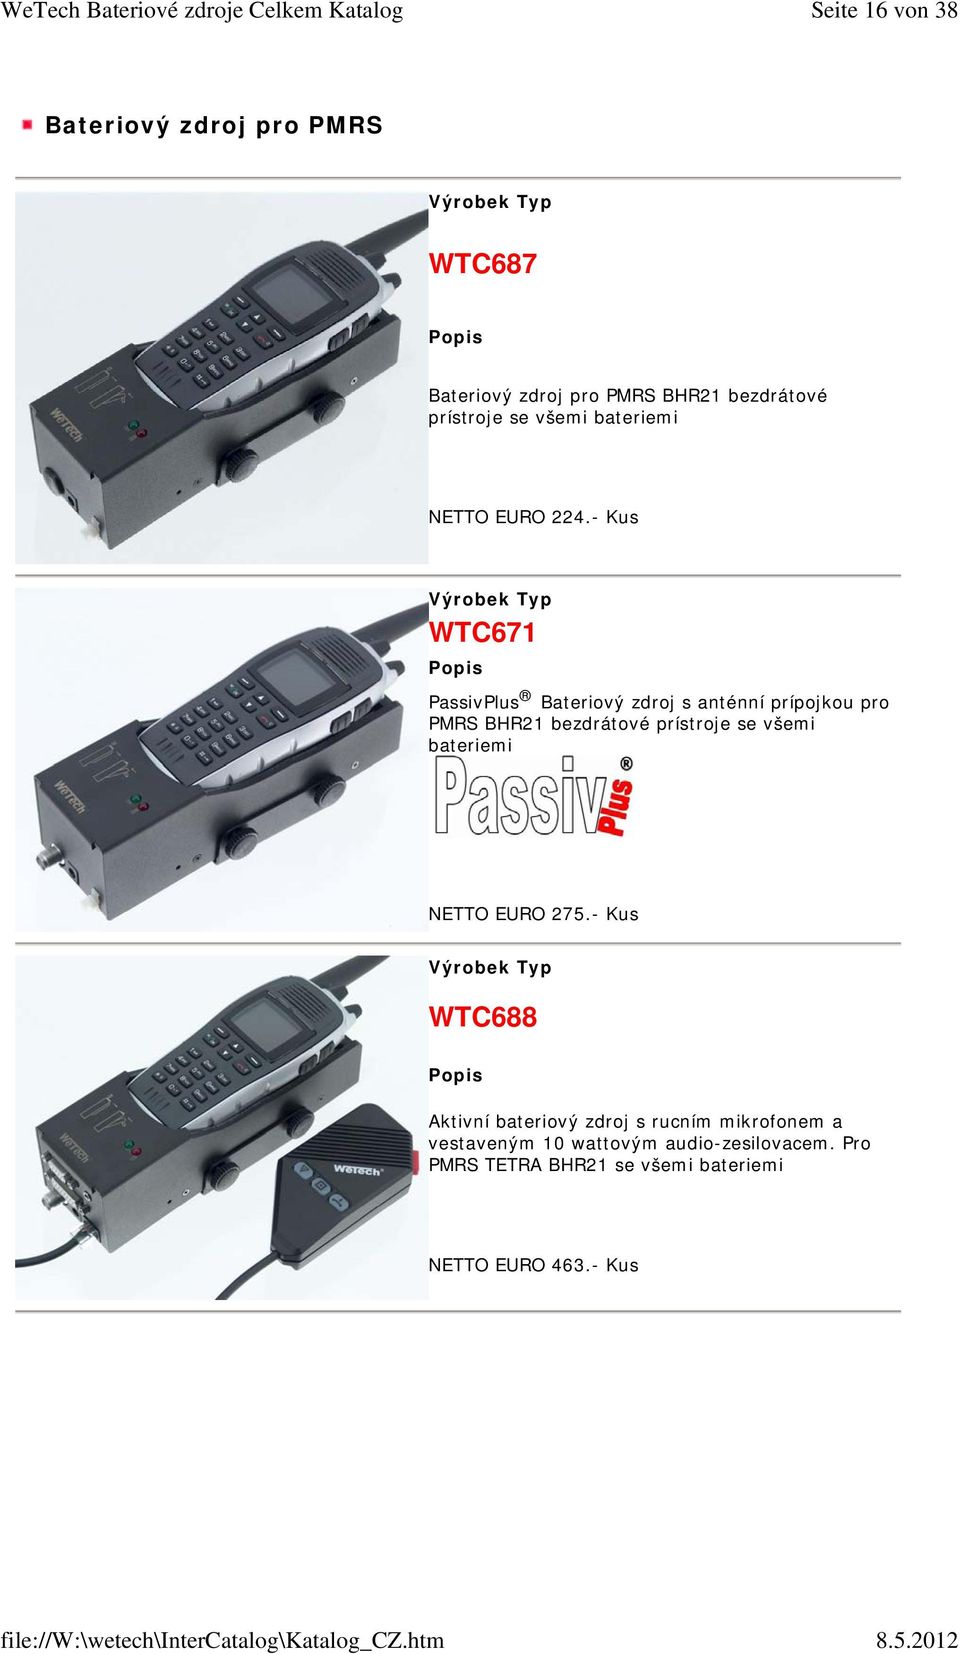 - Kus WTC671 PassivPlus Bateriový zdroj s anténní prípojkou pro PMRS BHR21 bezdrátové prístroje se všemi